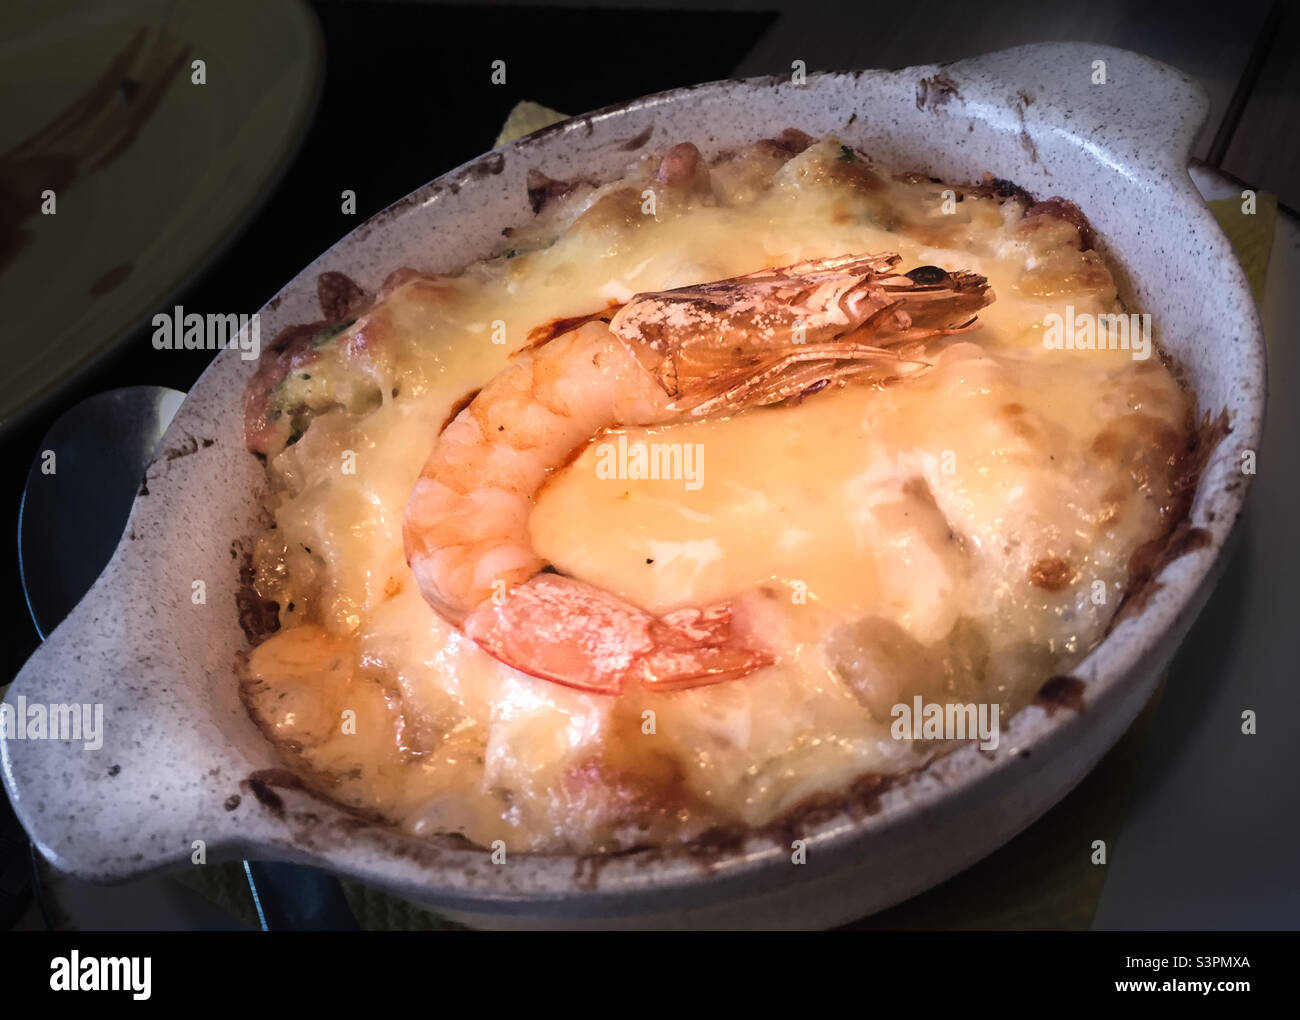 Shrimp and seafood casserole Stock Photo